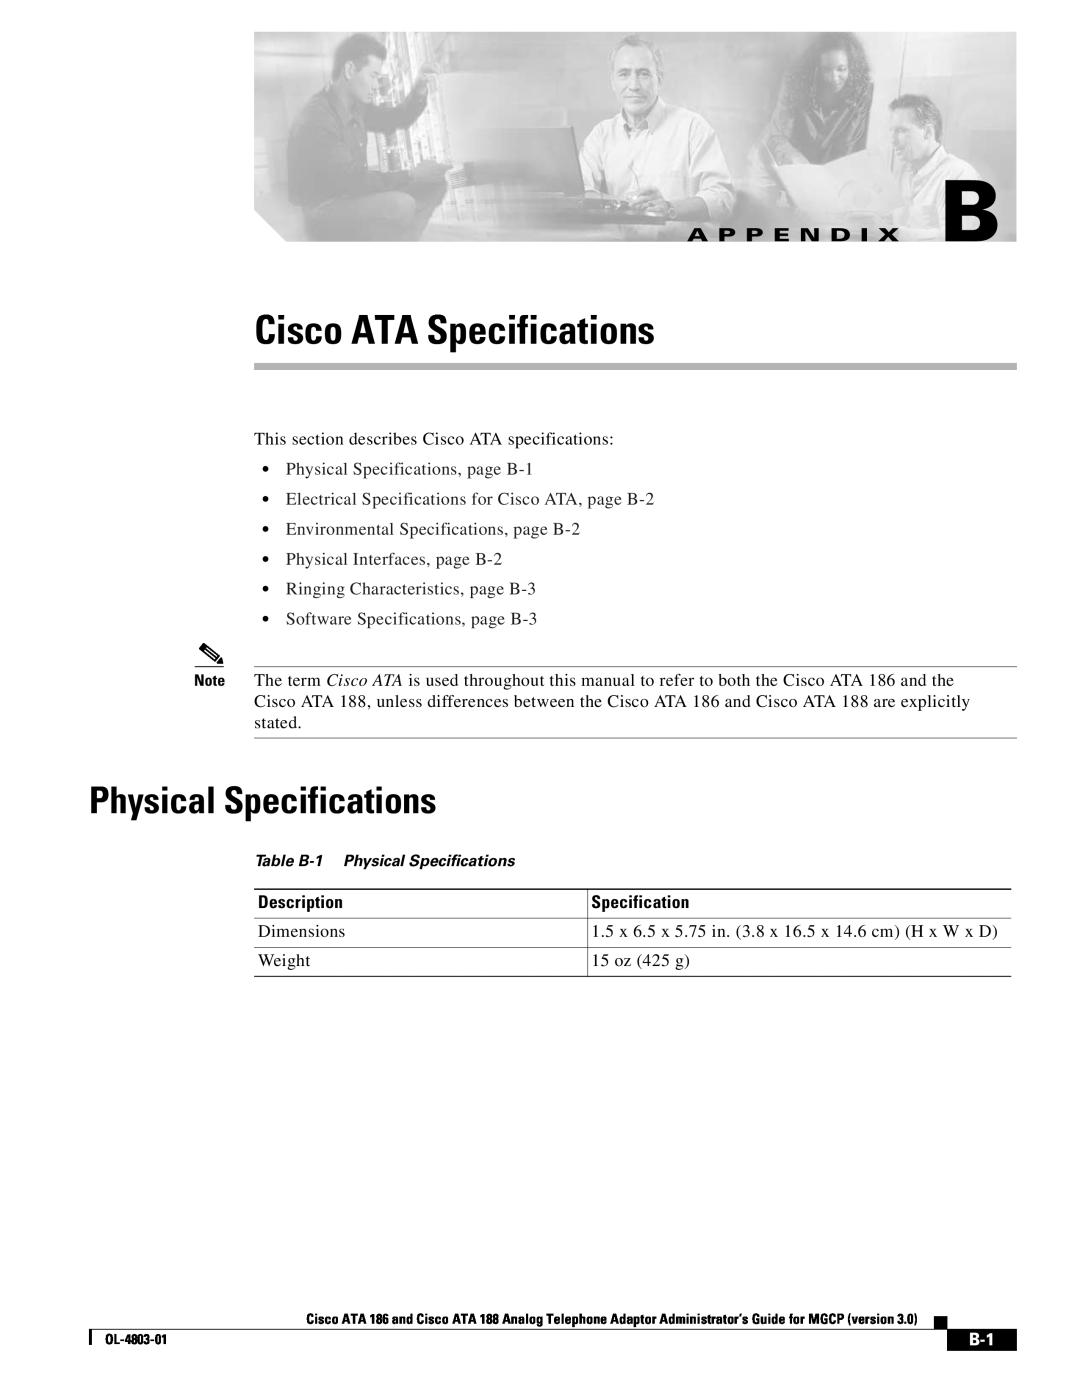 Cisco Systems ATA 188, ATA 186 manual Cisco ATA Specifications, Physical Specifications, A P P E N D I X B, Description 